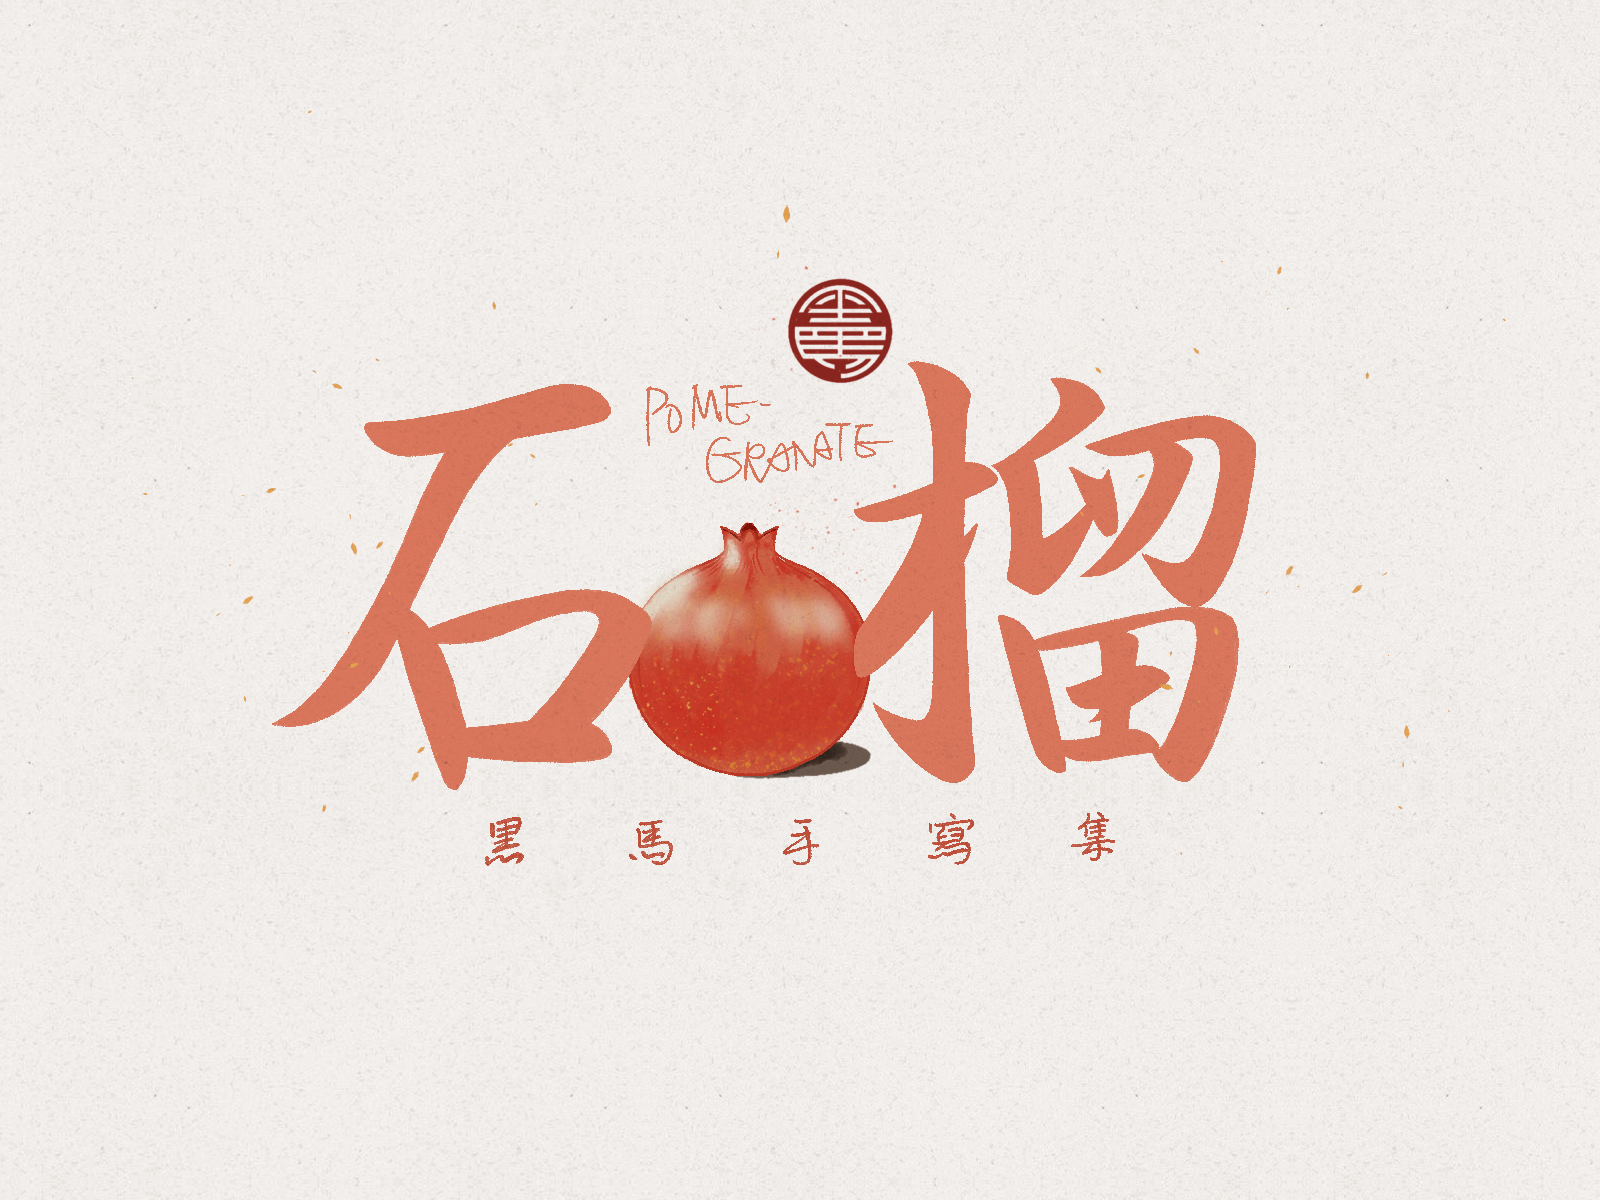 石榴 pomegranate:行书